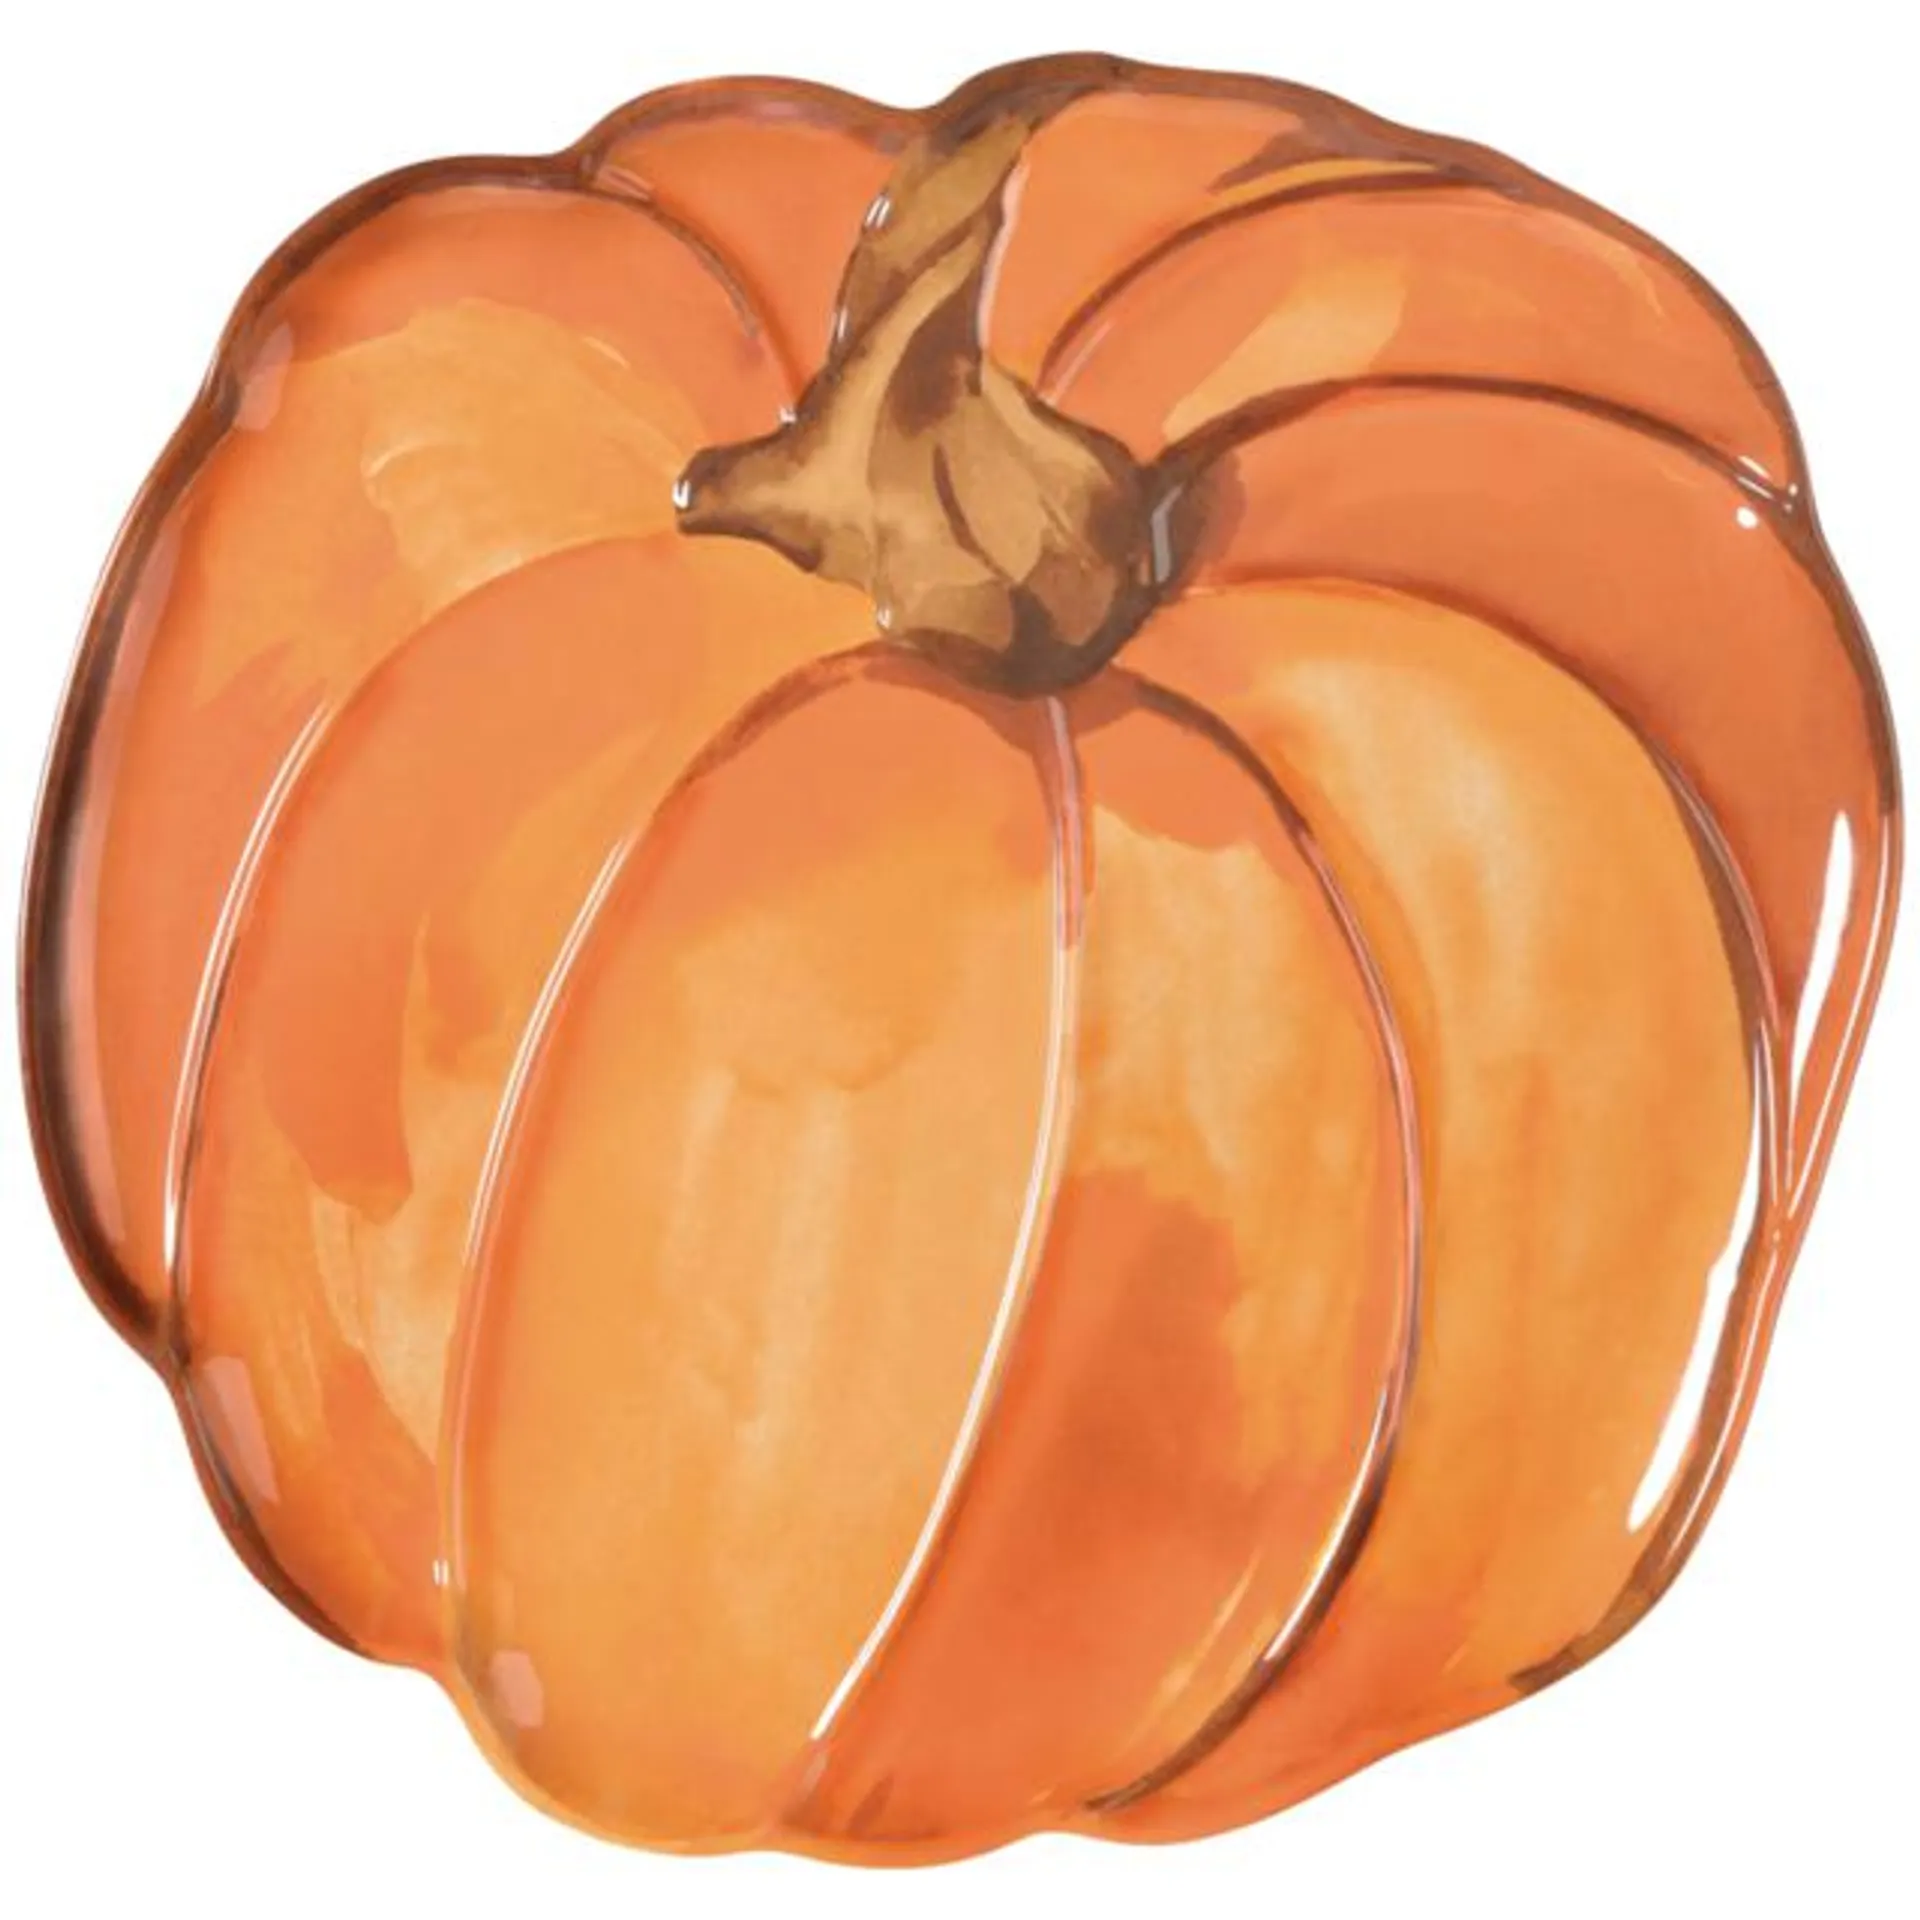 Pumpkin Shaped Reusable Plastic Serving Platter, Orange, 14-in, Table Decoration for Fall